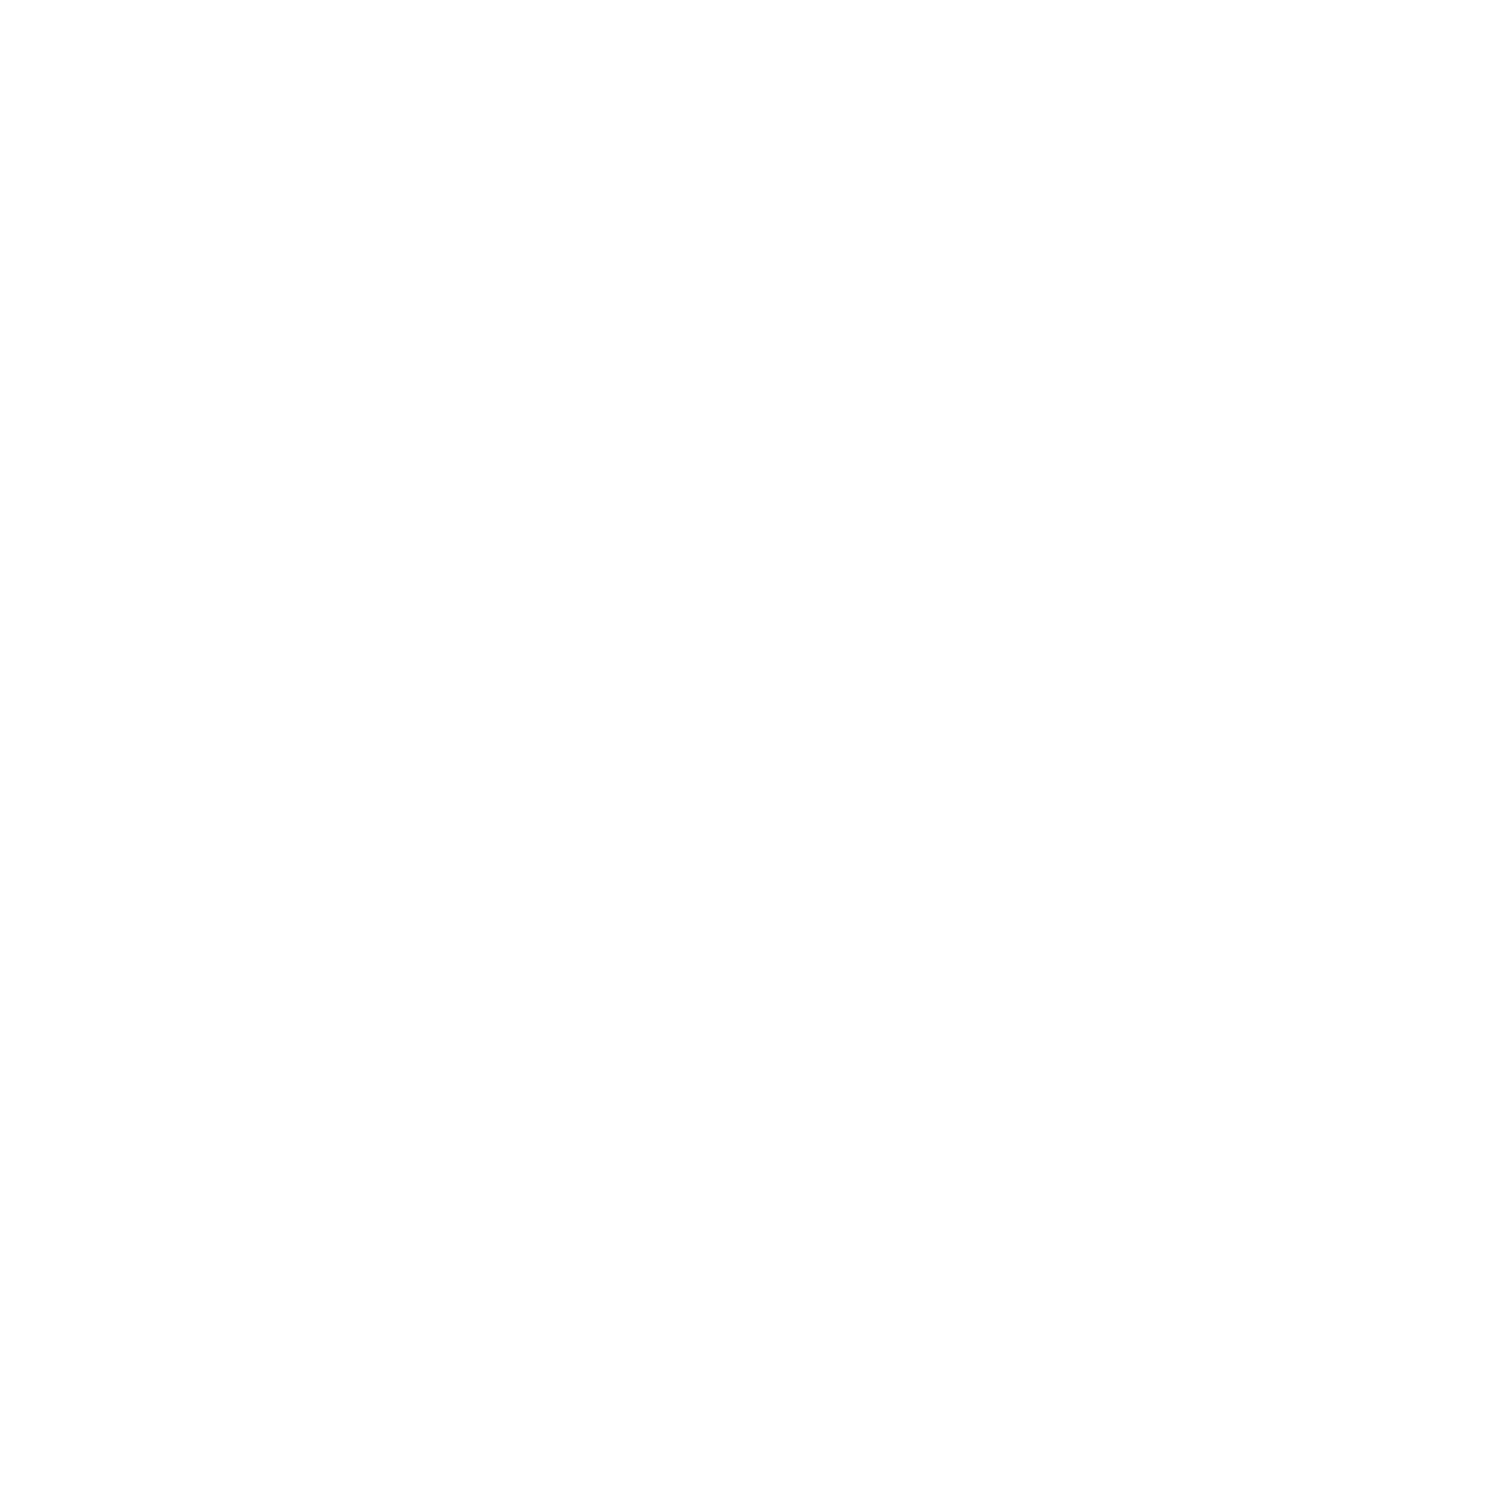 Creating Better